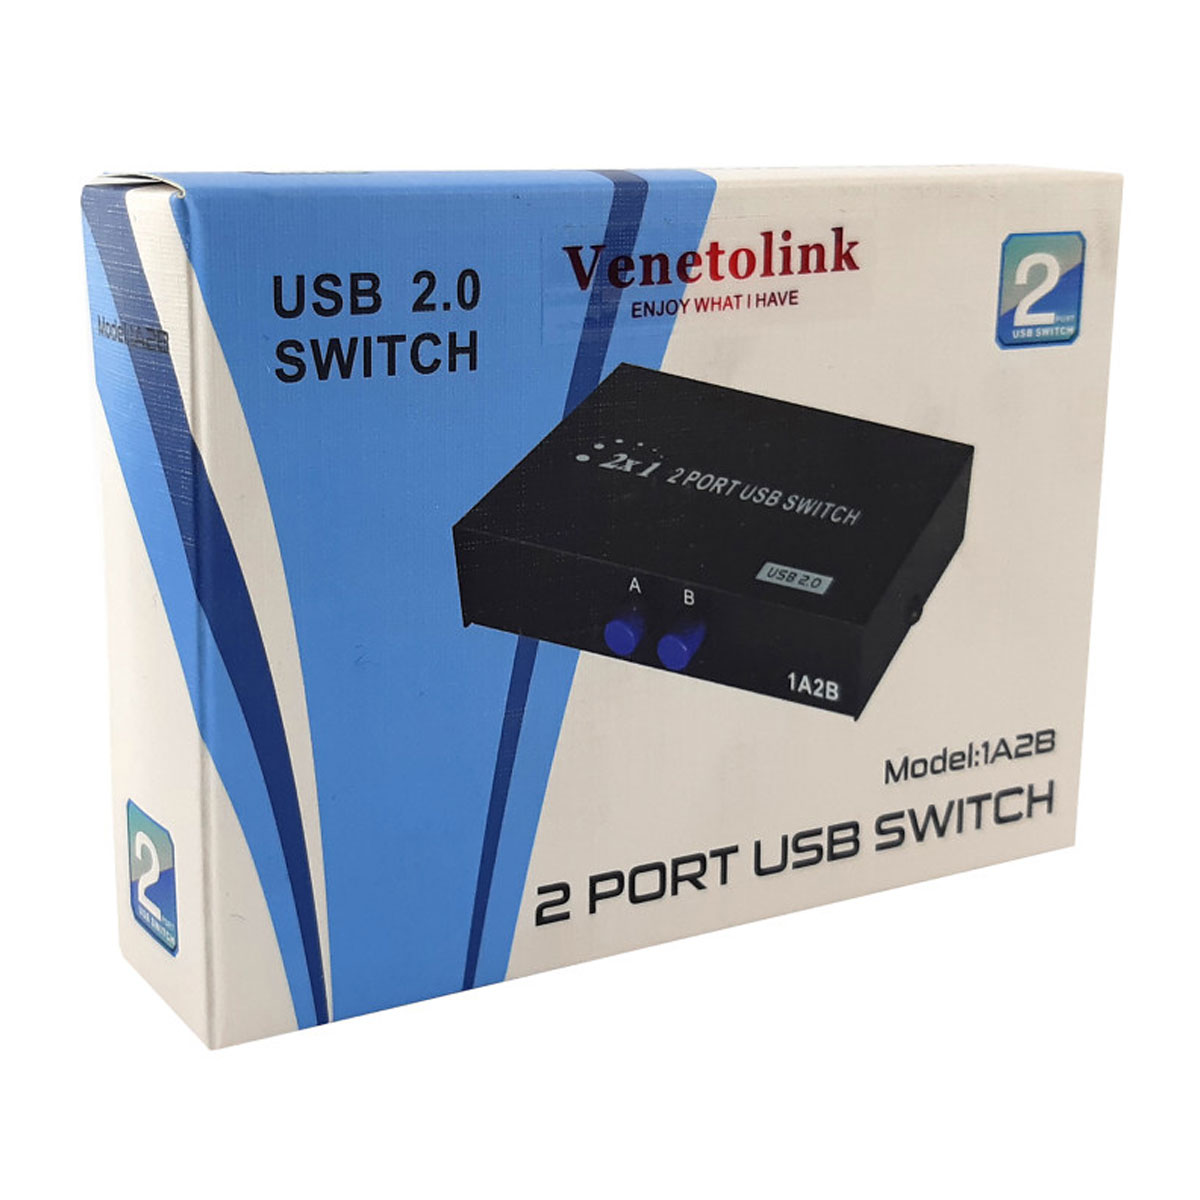 Venetolink 2 port USB switch-01